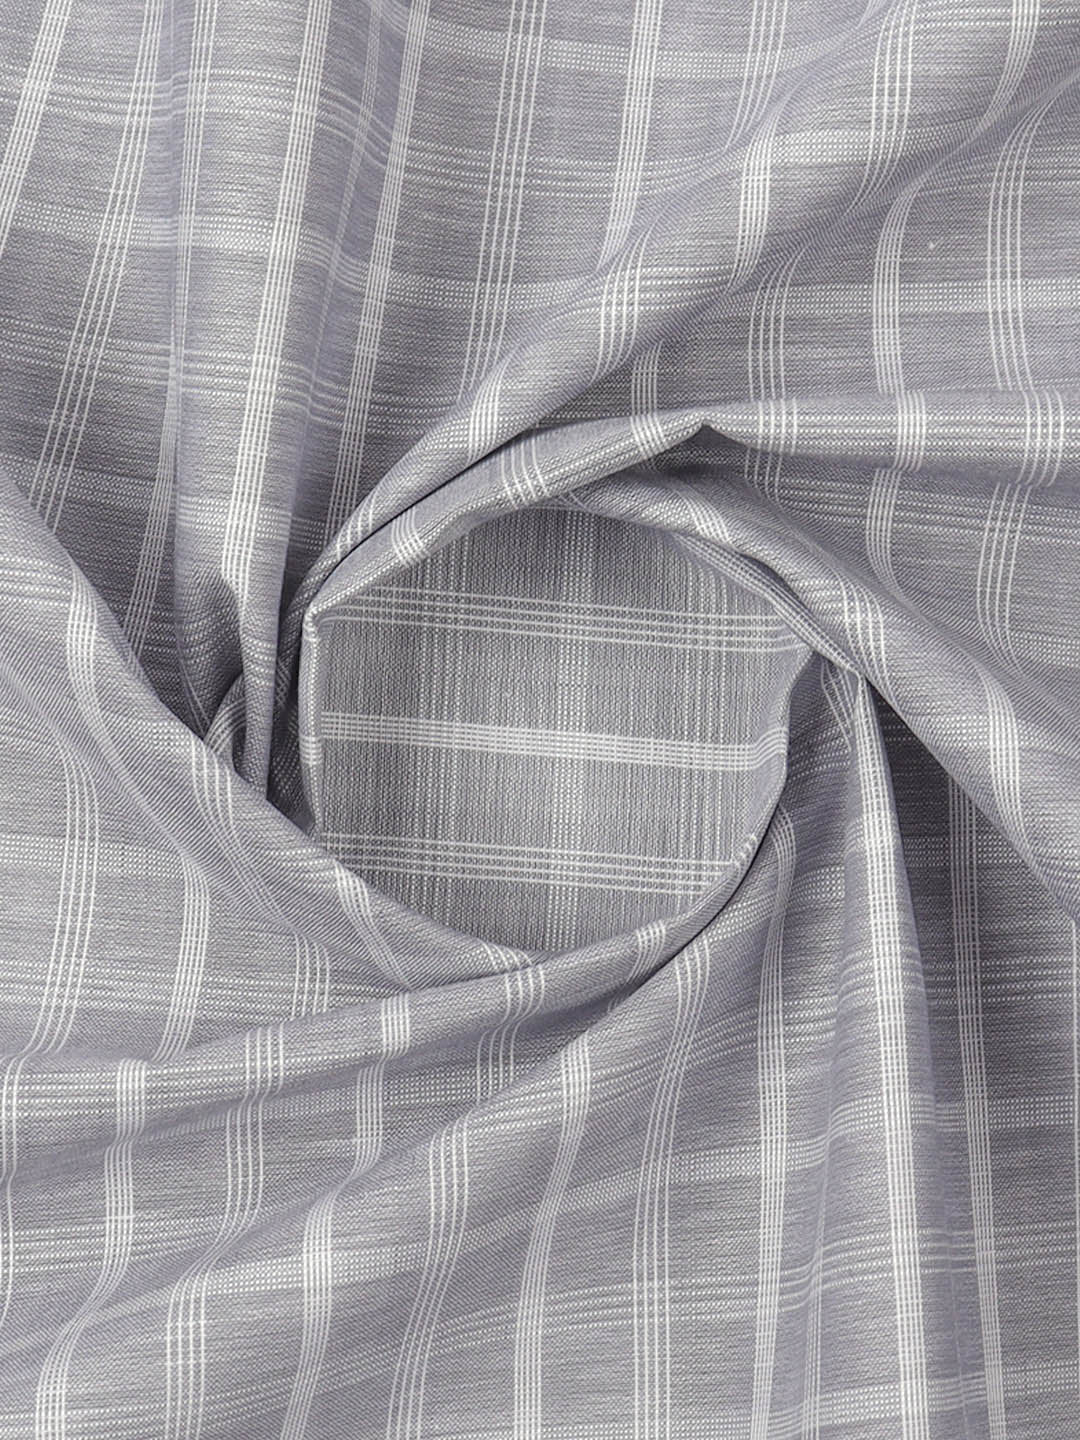 Cotton Checks Grey Colour Traditional Shirting Fabric High Style